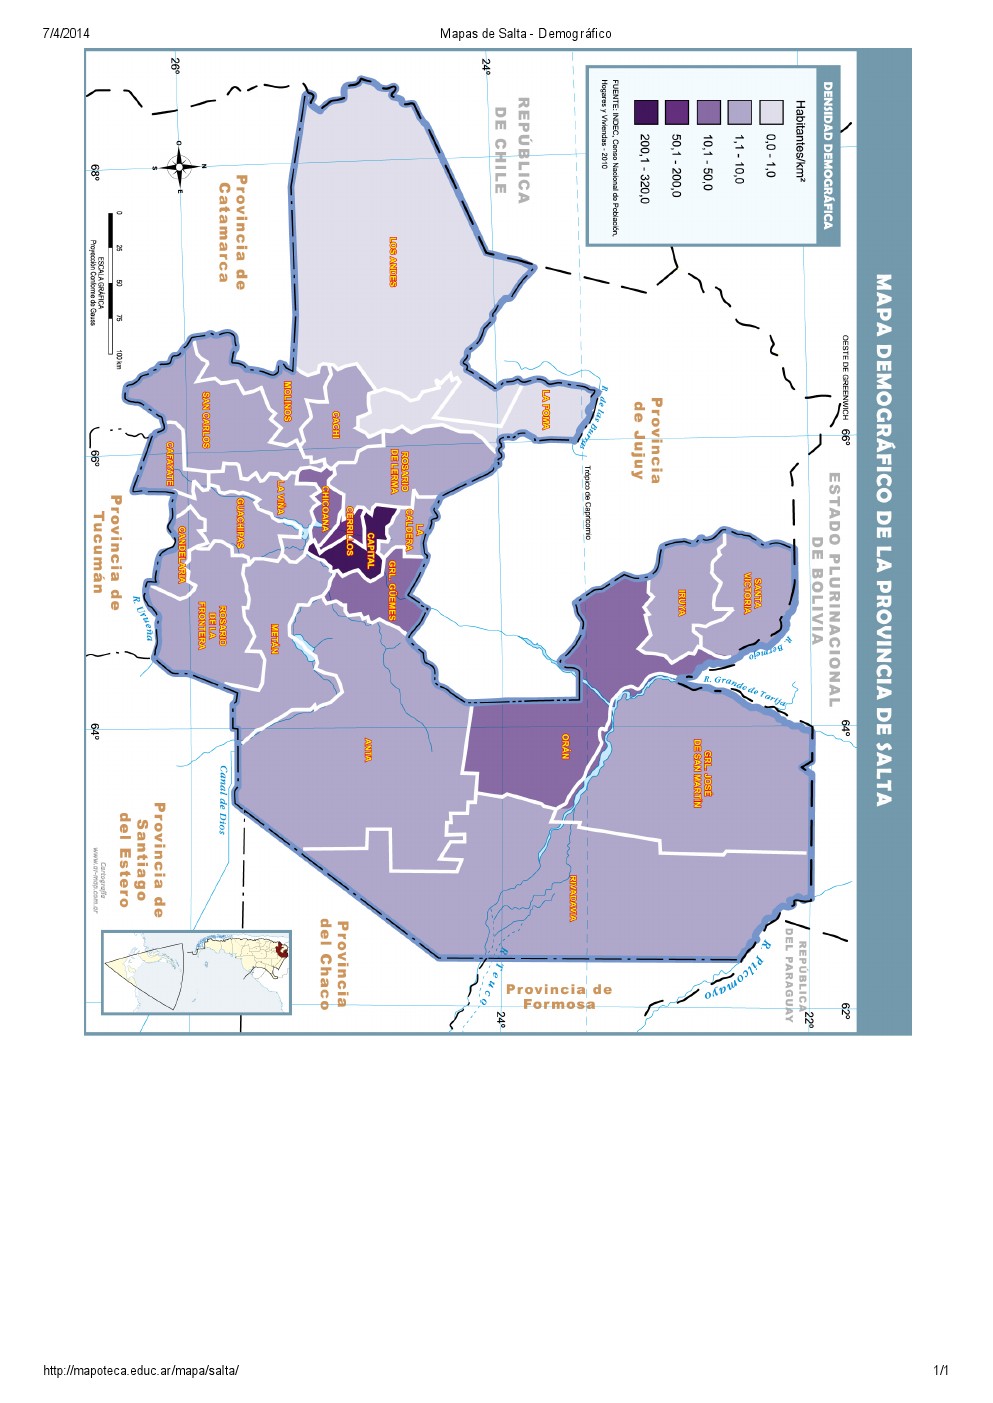 Mapa demográfico de Salta. Mapoteca de Educ.ar